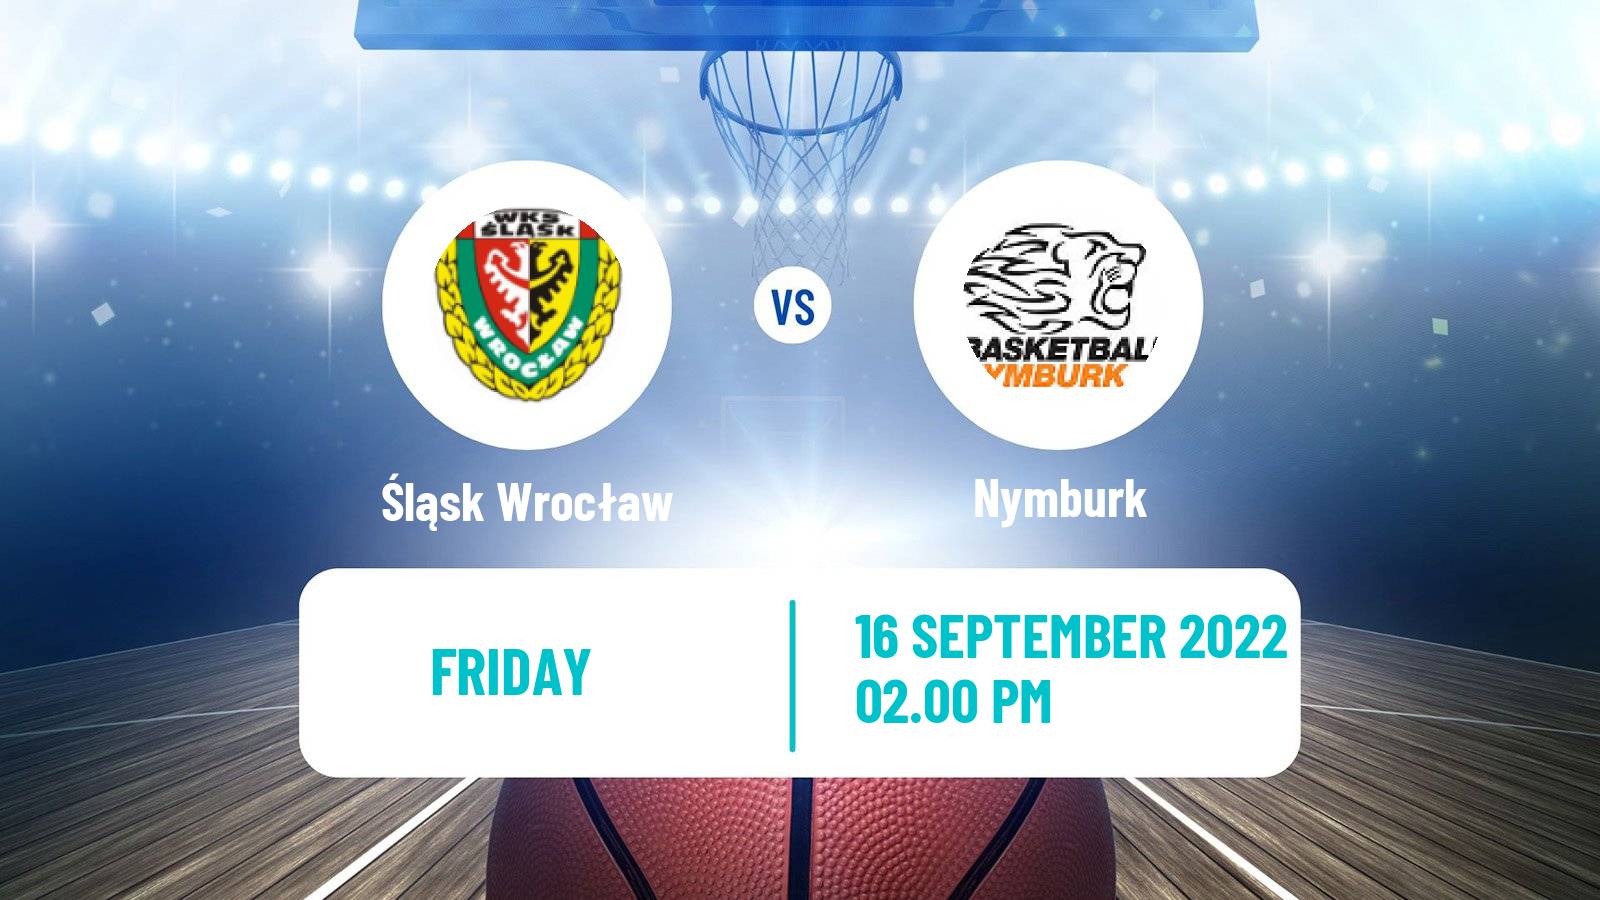 Basketball Club Friendly Basketball Śląsk Wrocław - Nymburk